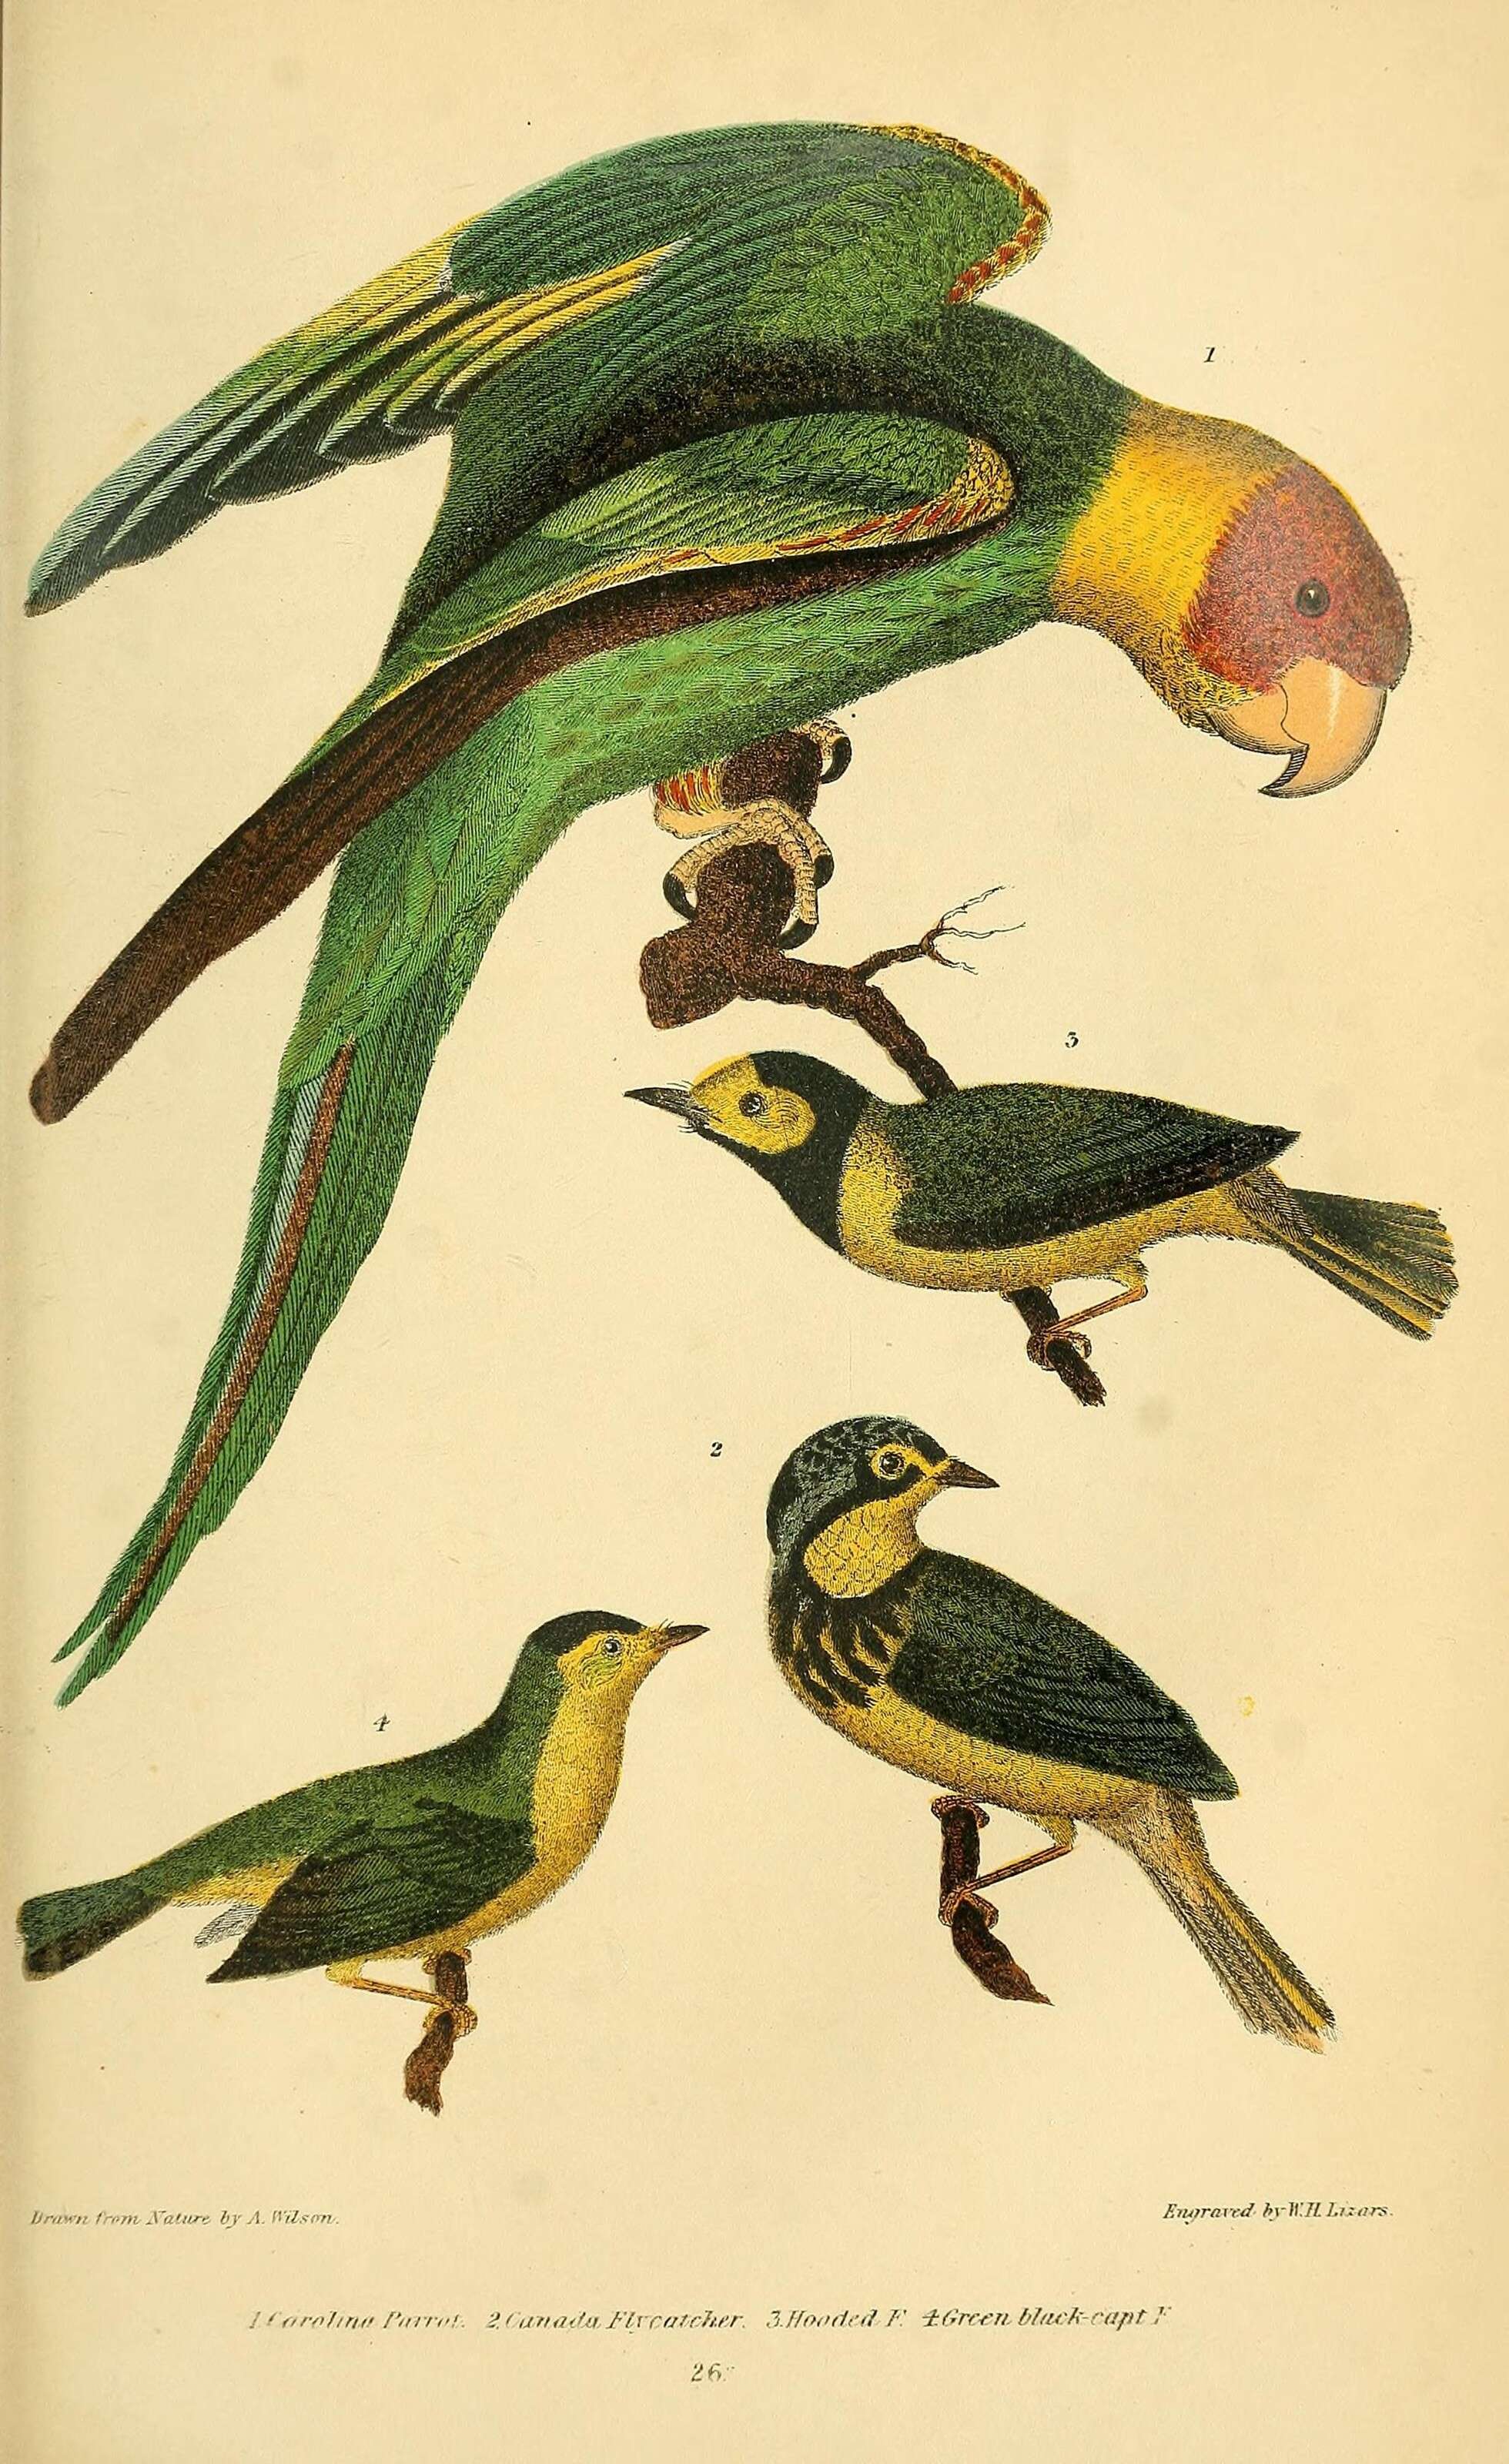 Image of Conuropsis Salvadori 1891